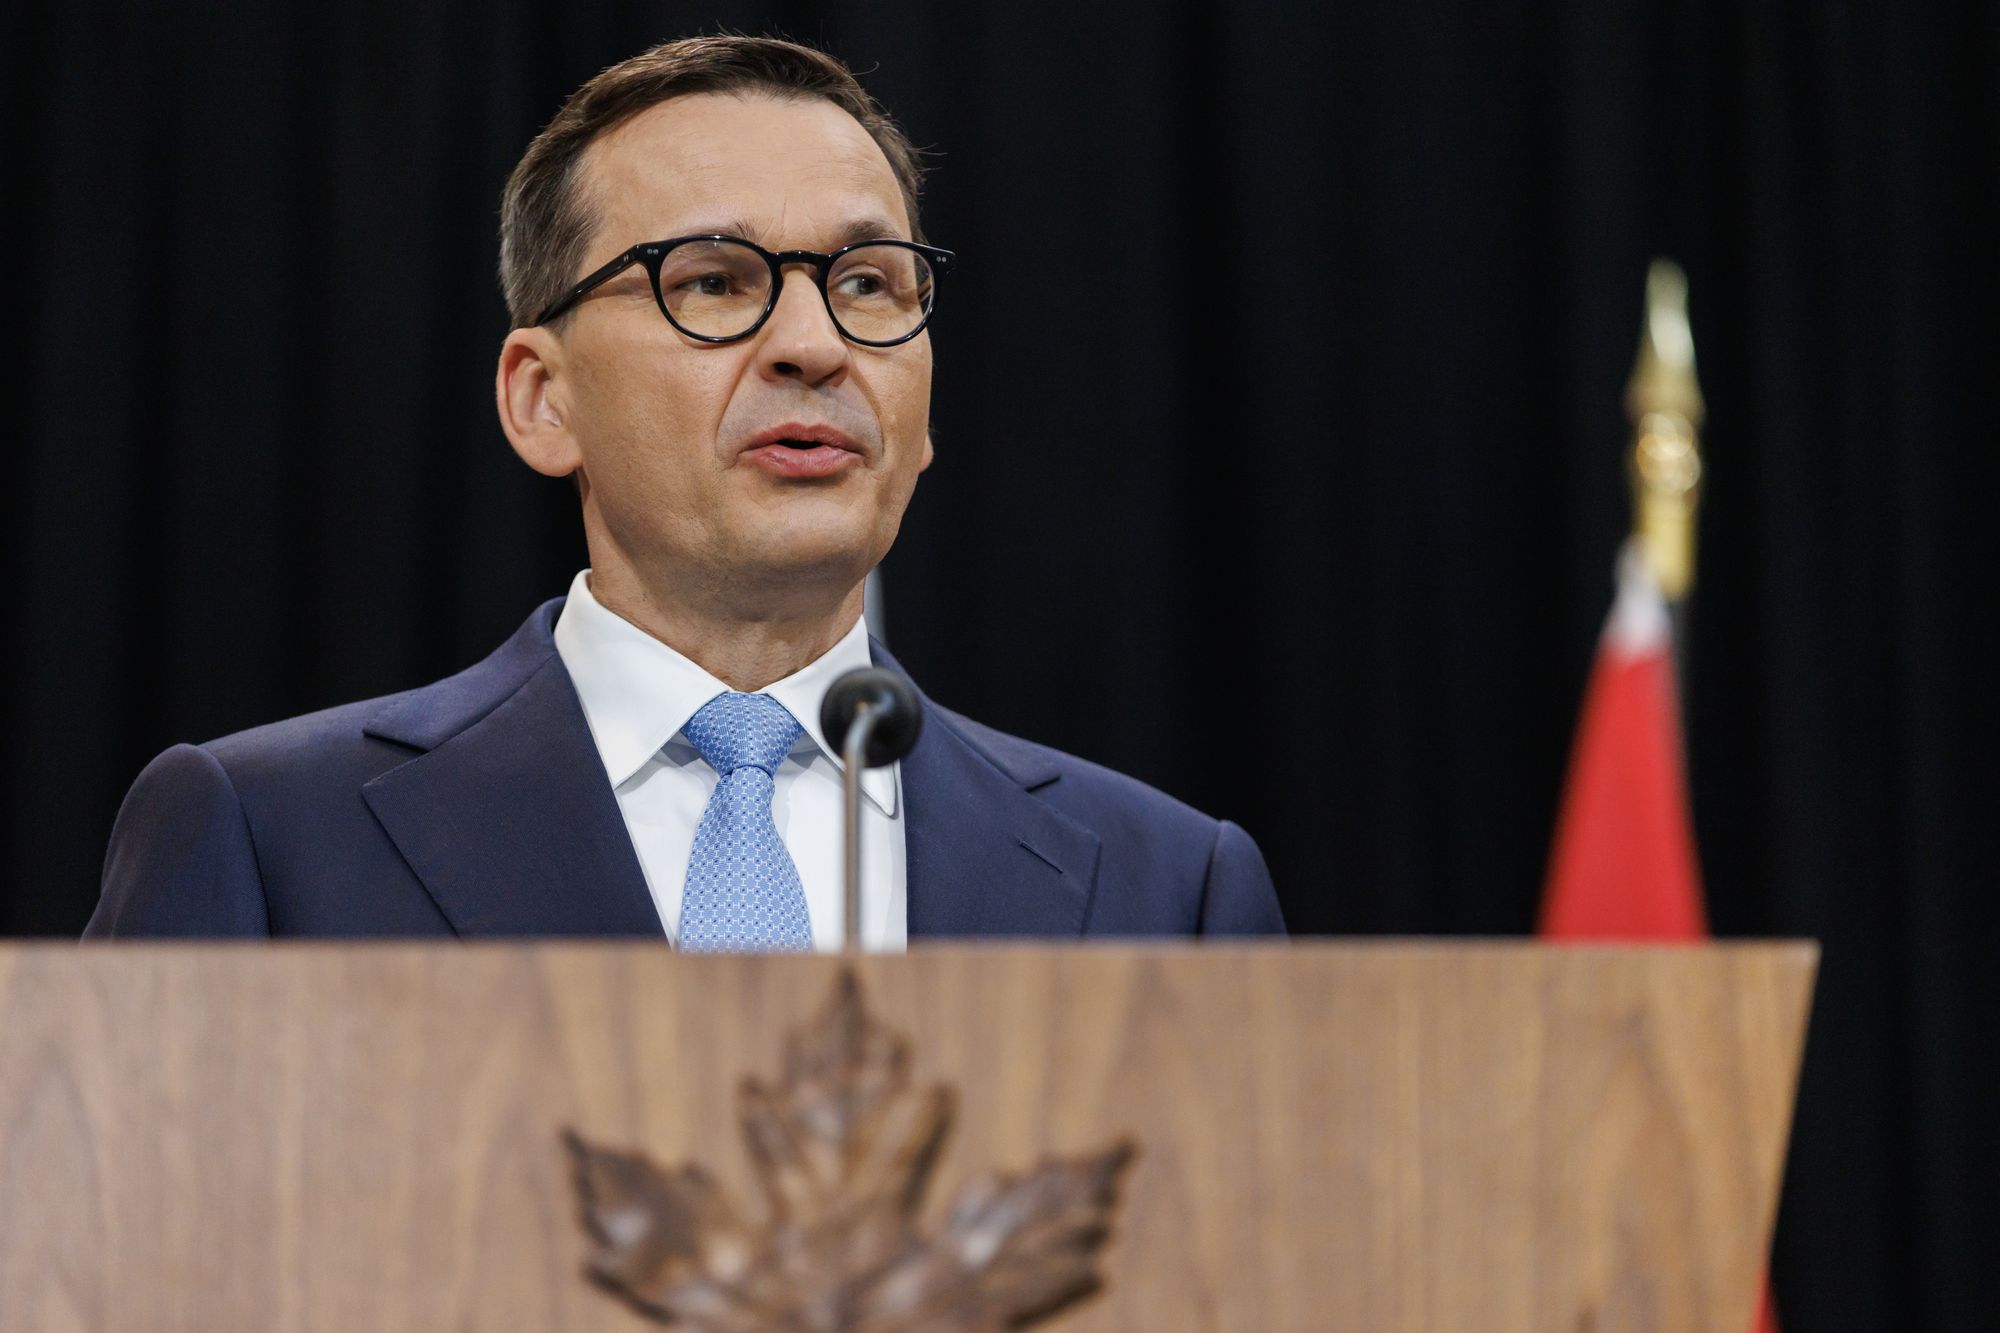 Polish PM: Ukraine deserves 'very quick path' to NATO membership